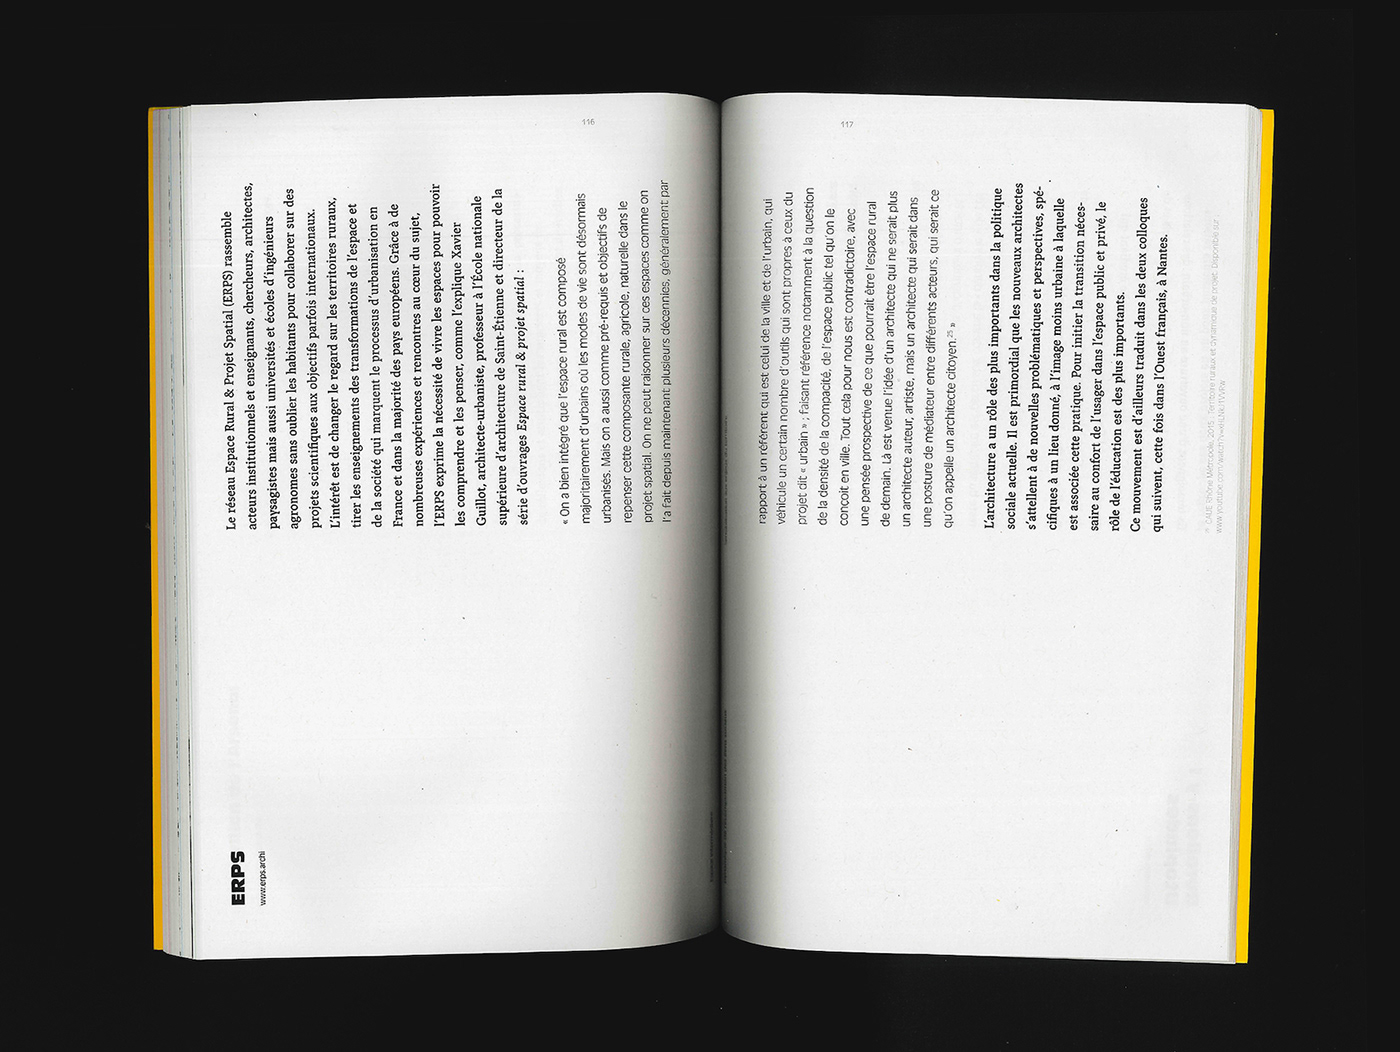 tesis rural print type kitch brutal Mémoire recherche campagne Anti-Design